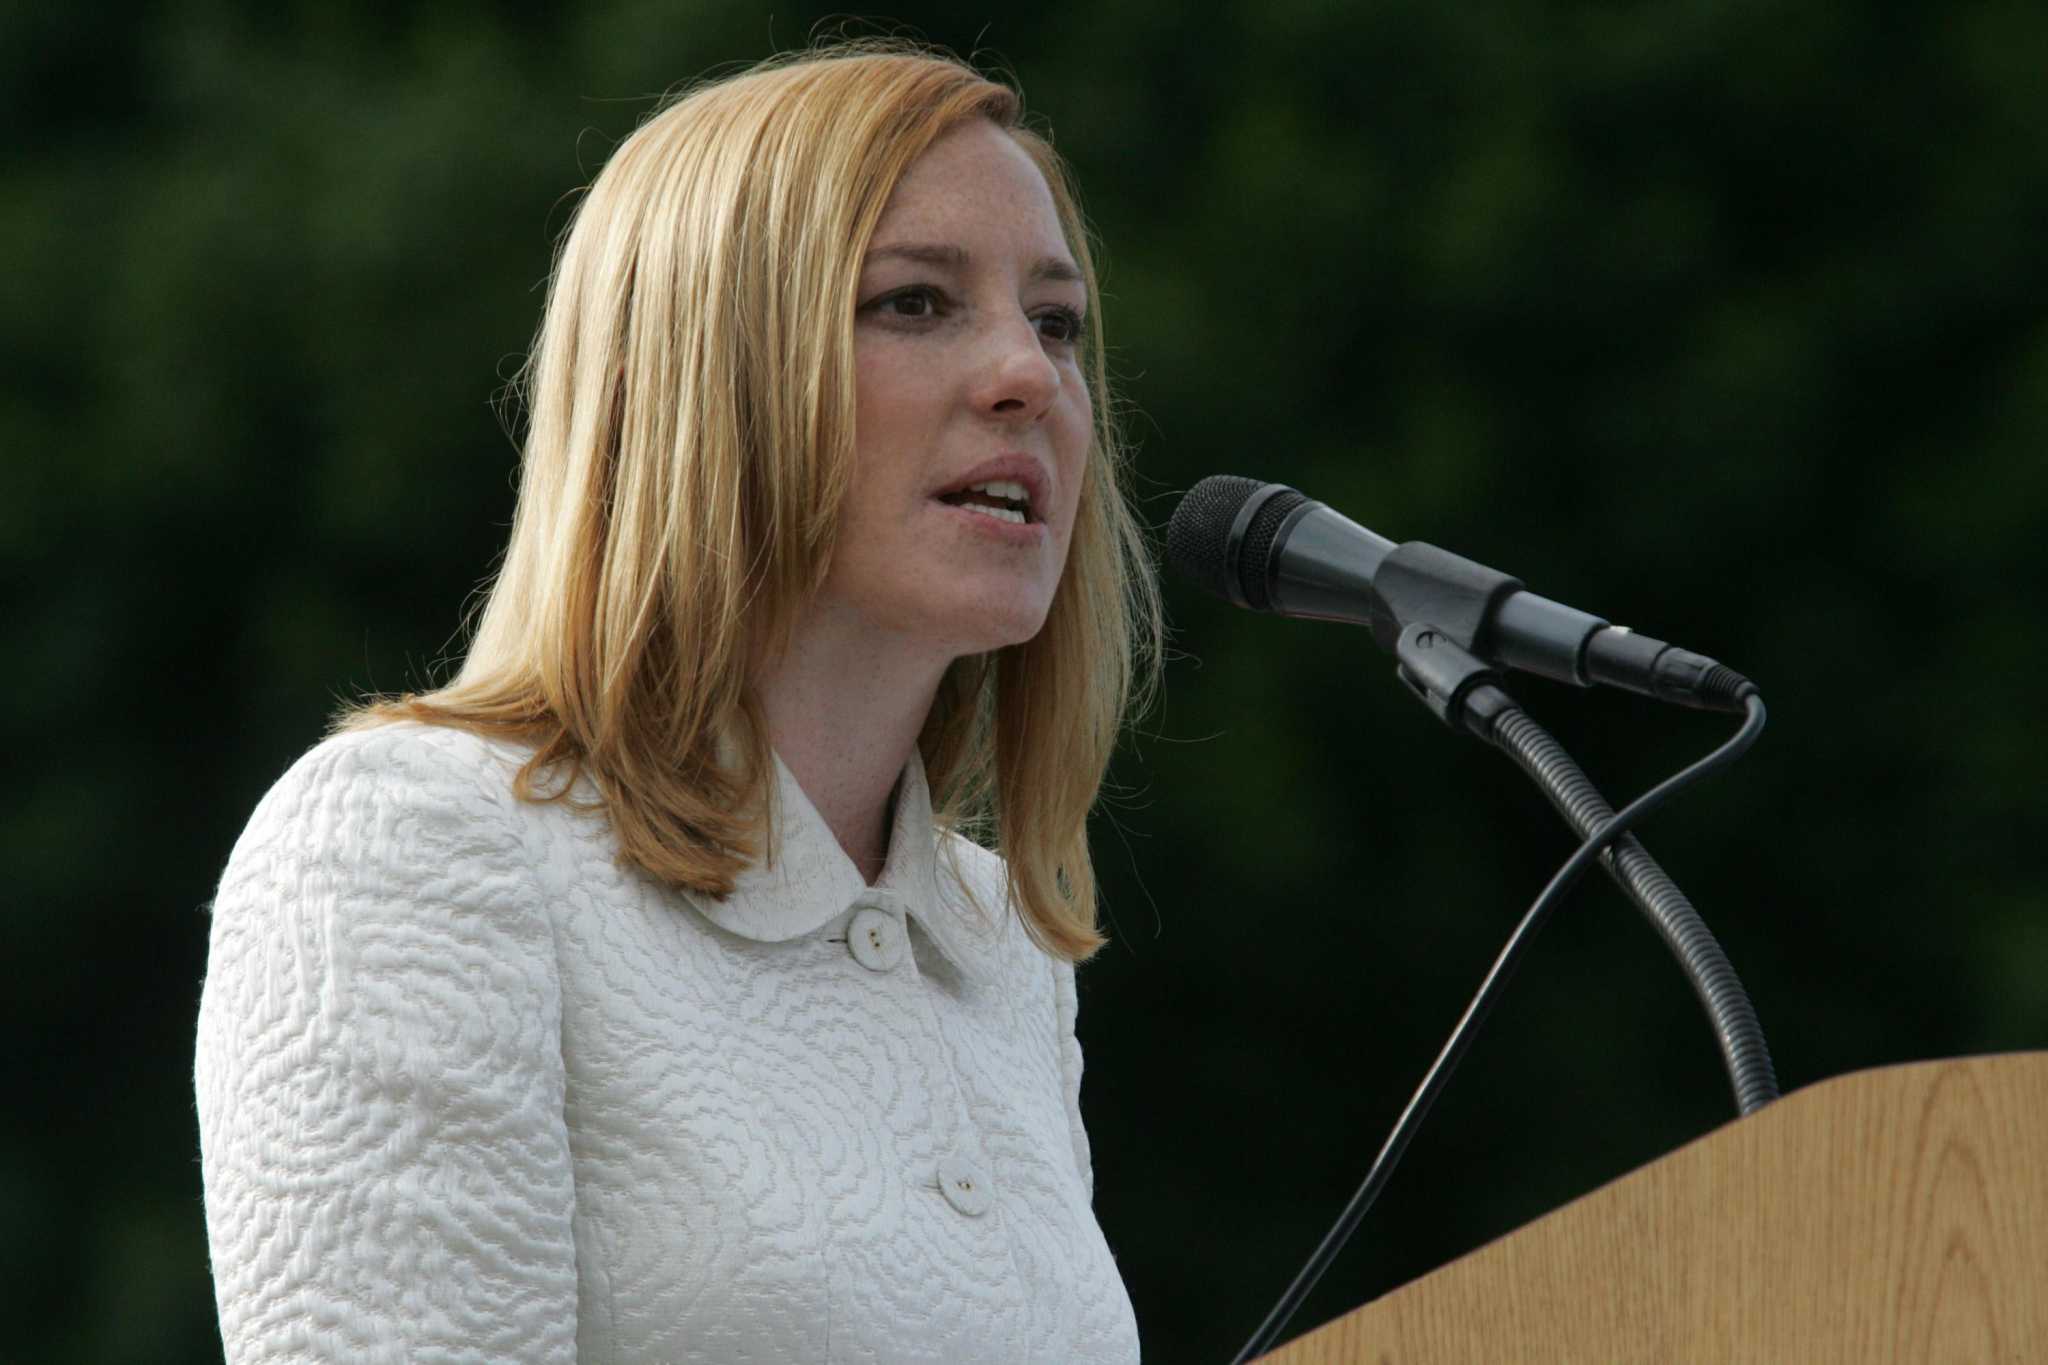 5 things you may not know about White House Press Secretary Jen Psaki